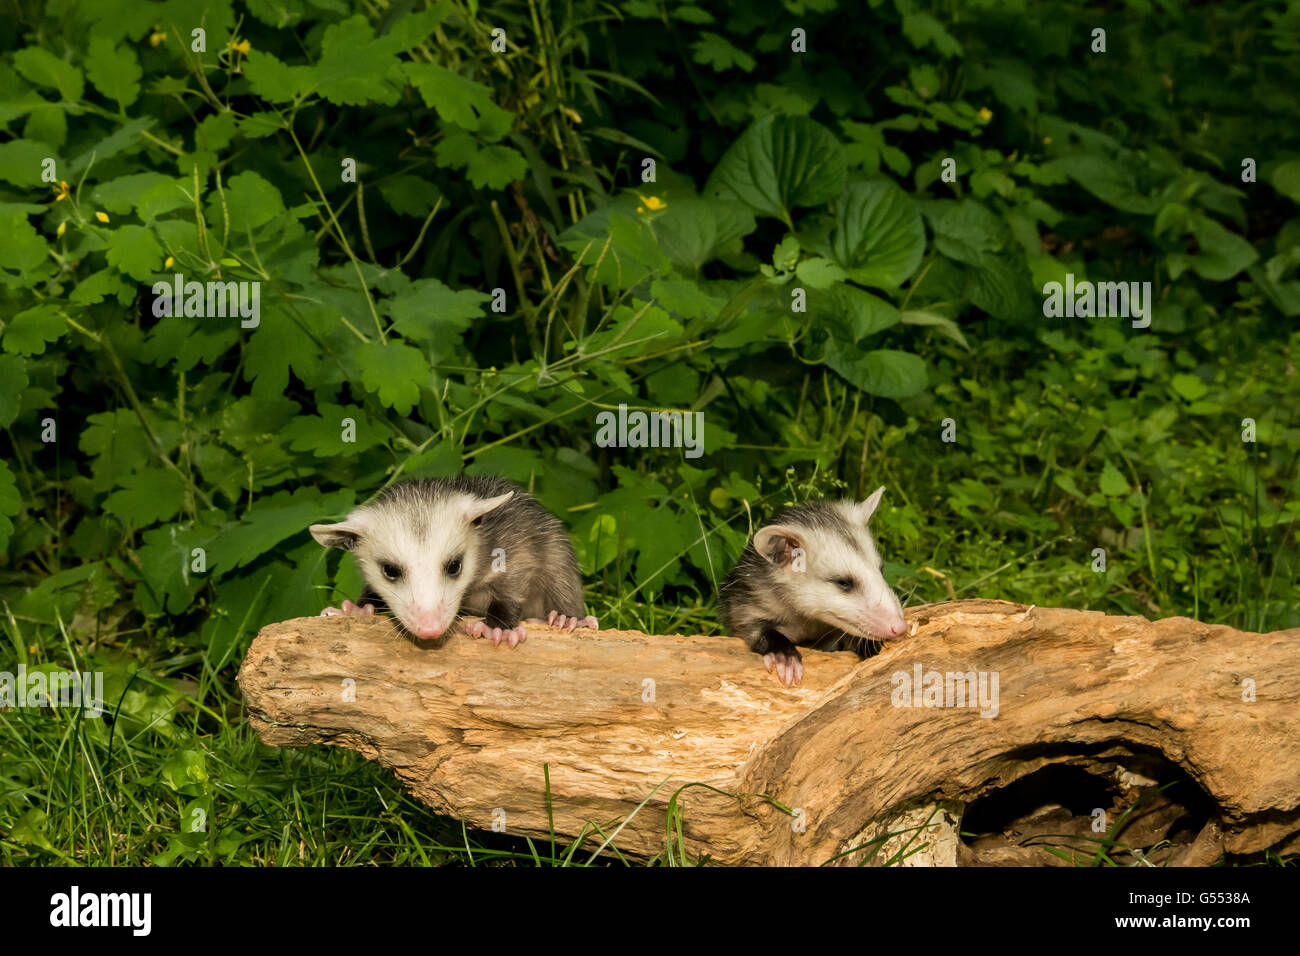 https://c8.alamy.com/comp/G5538A/baby-opossum-learning-to-climb-G5538A.jpg